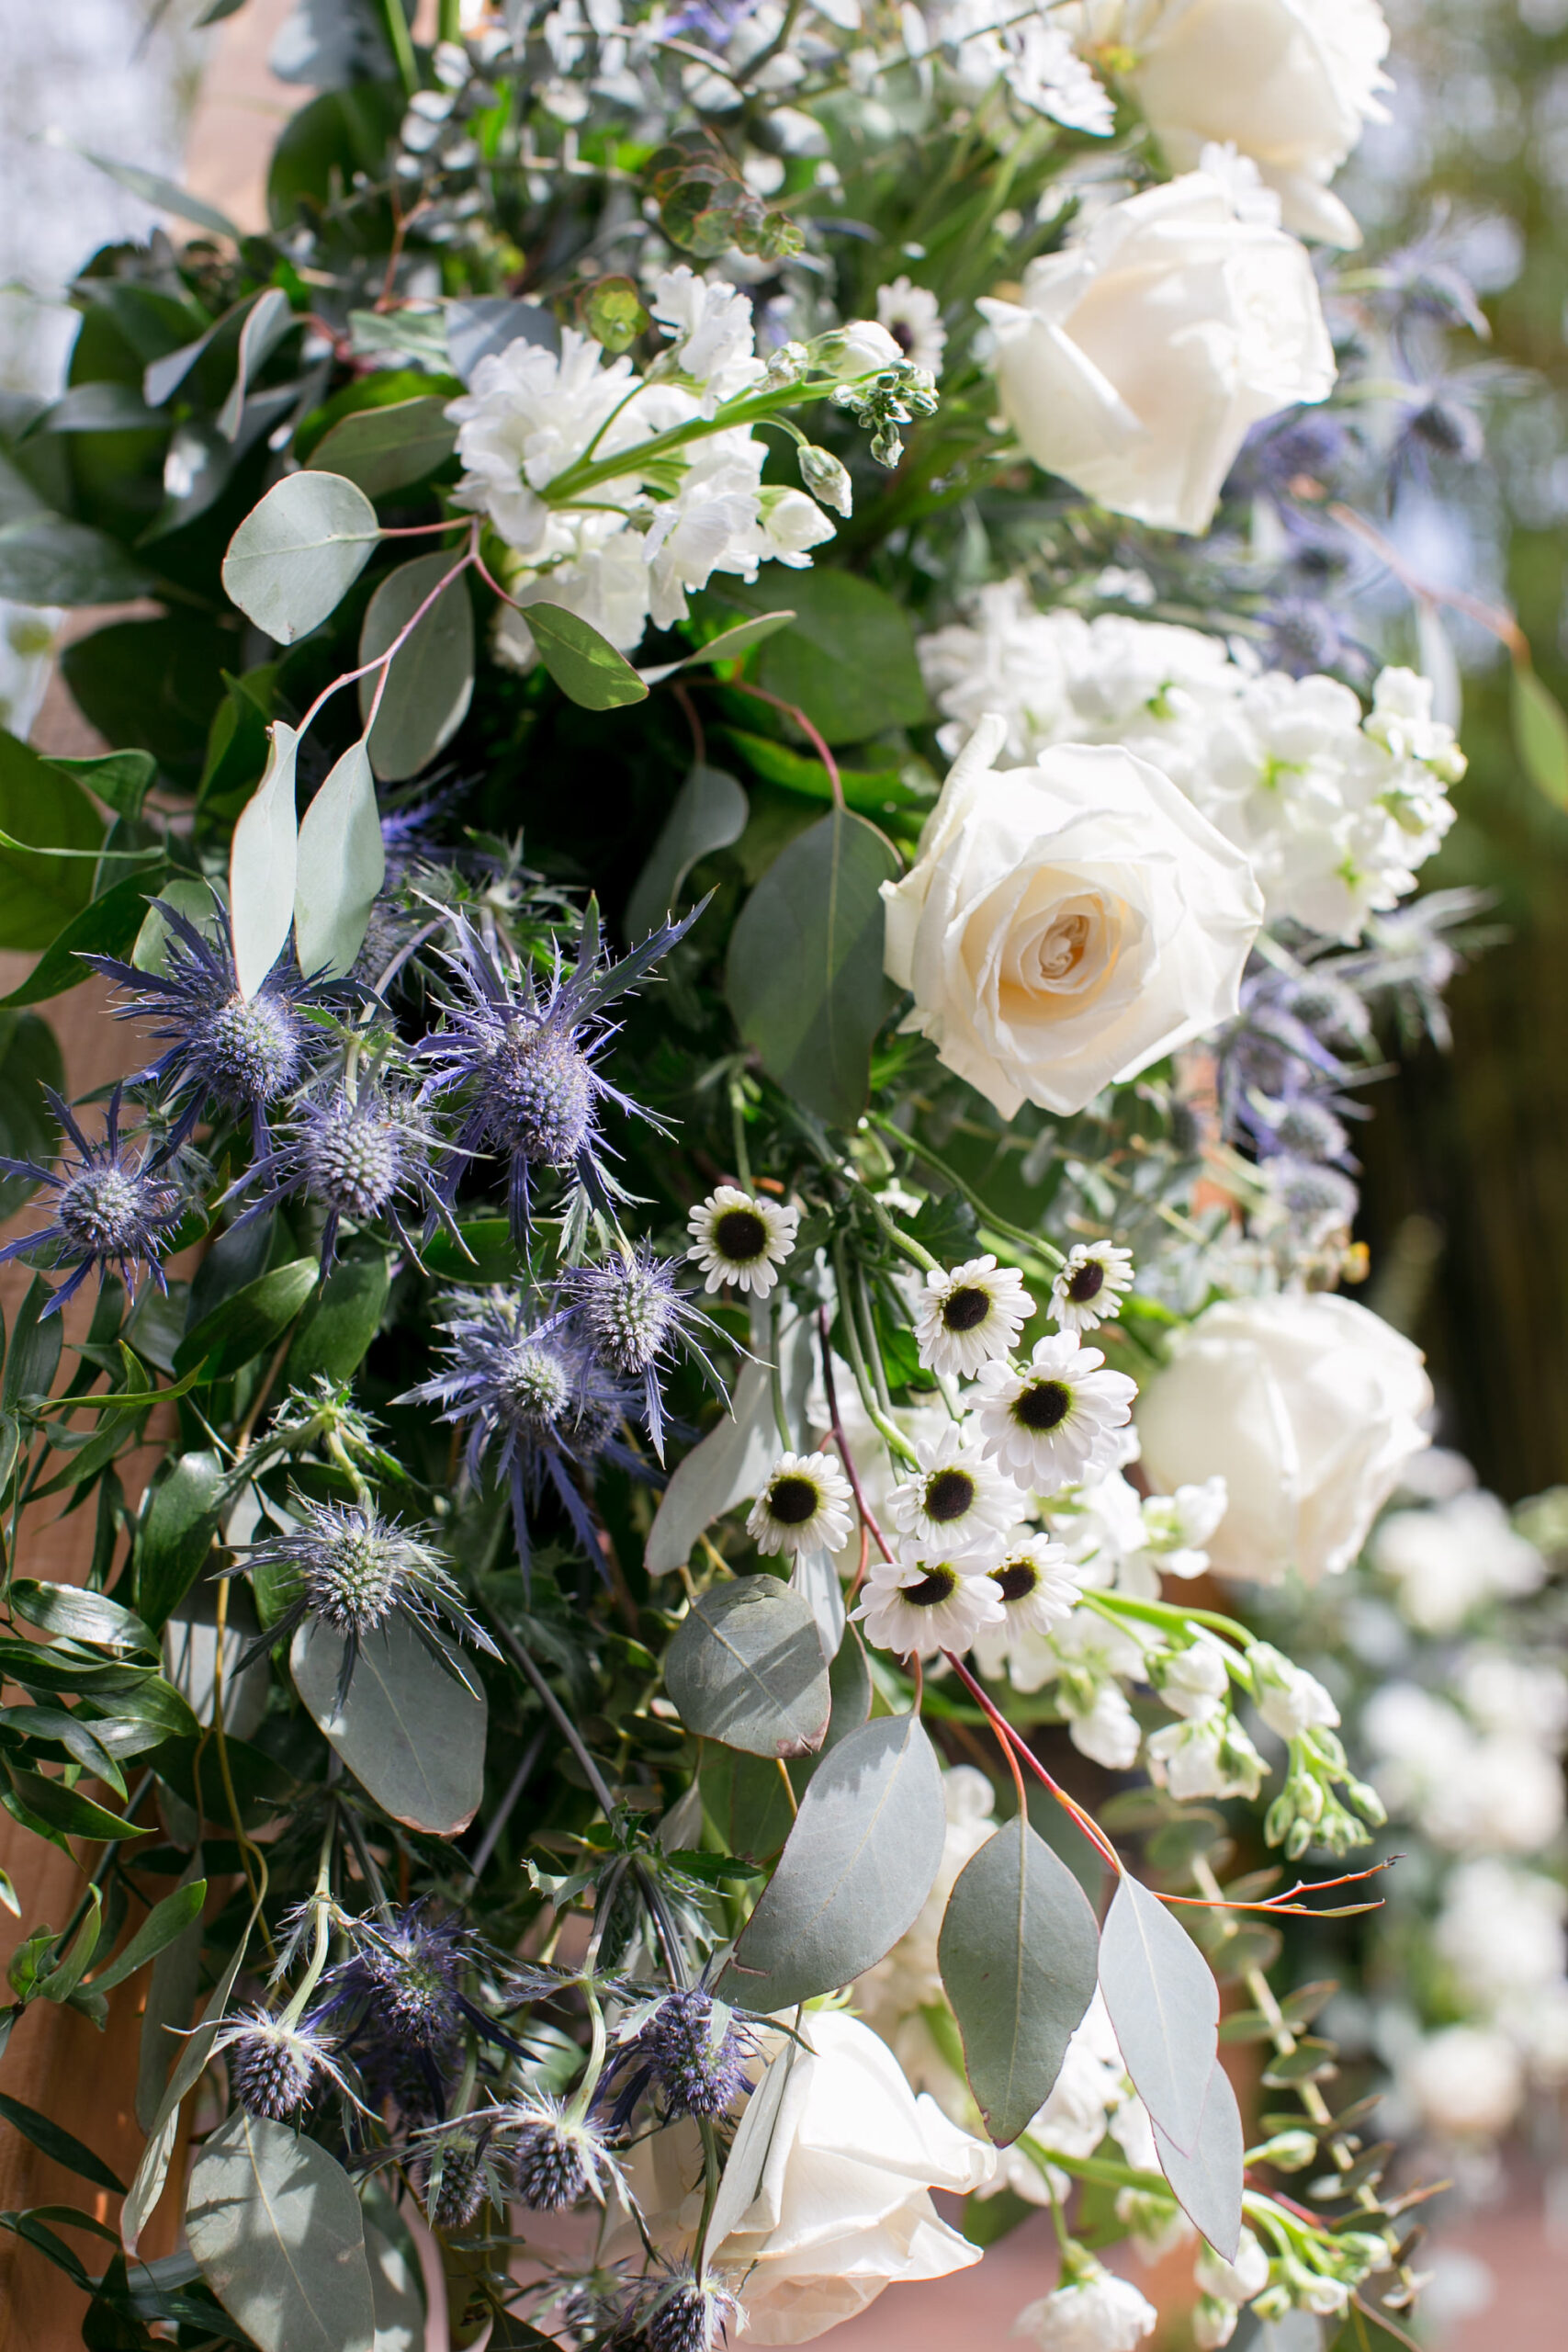 Garden Wedding Decor Ideas | White Roses with Blue Thistle and Eucalyptus Greenery Wedding Ceremony Arch Flower Arrangement Inspiration